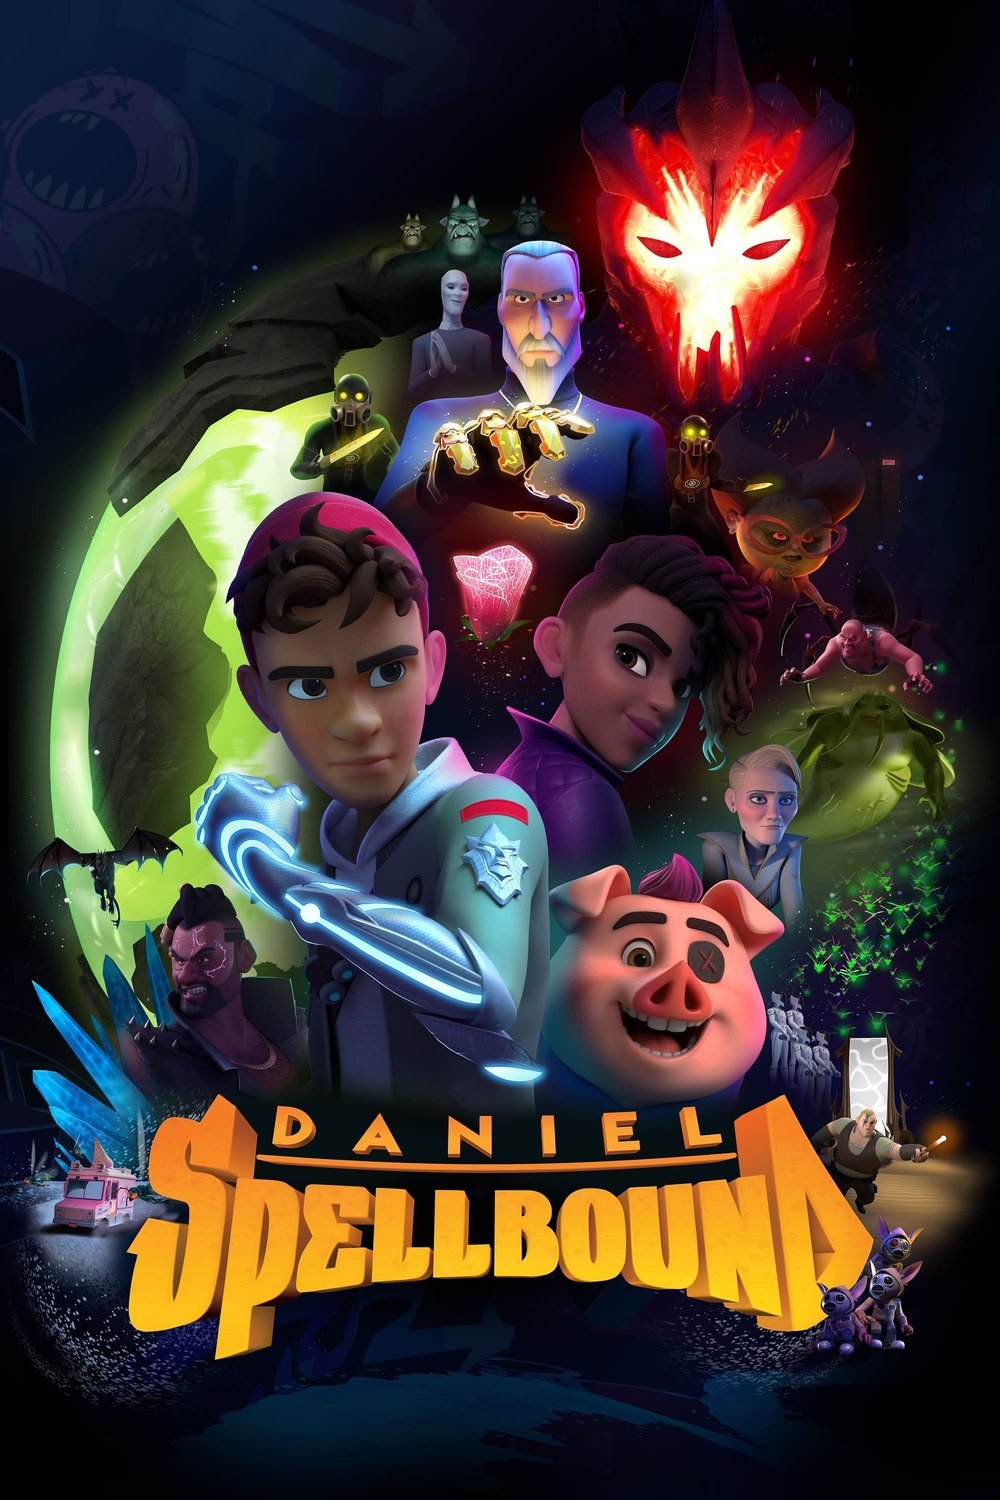 Poster of the movie Daniel Spellbound